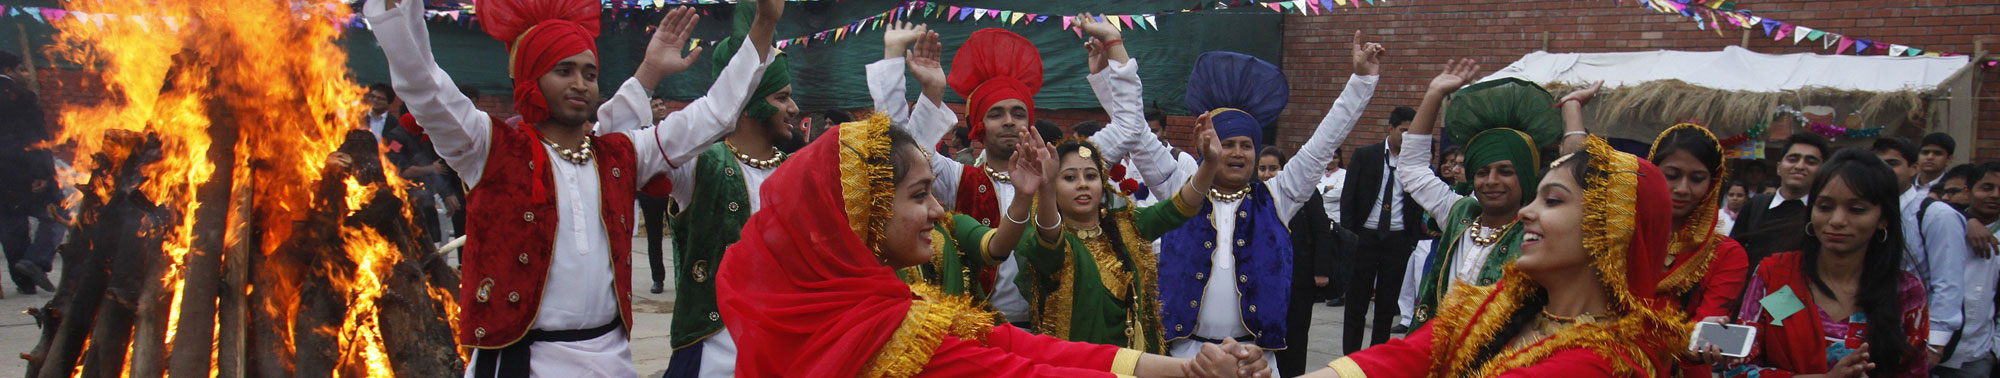 Indian Fast & Festivals